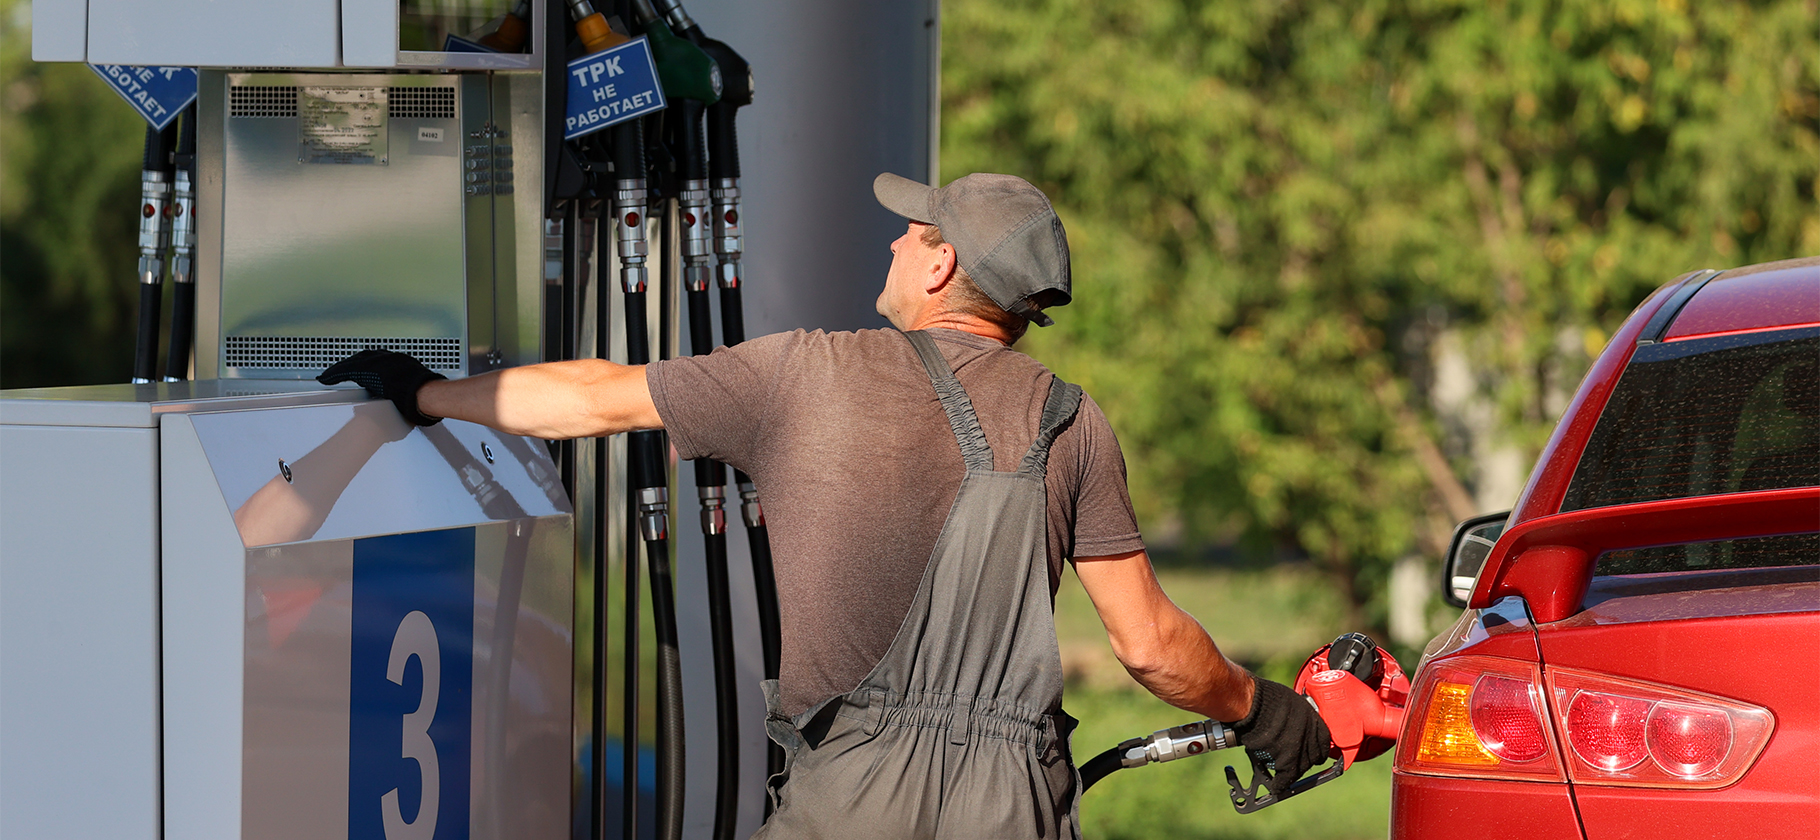 Правительство ограничило экспорт бензина: остановит ли это рост цен